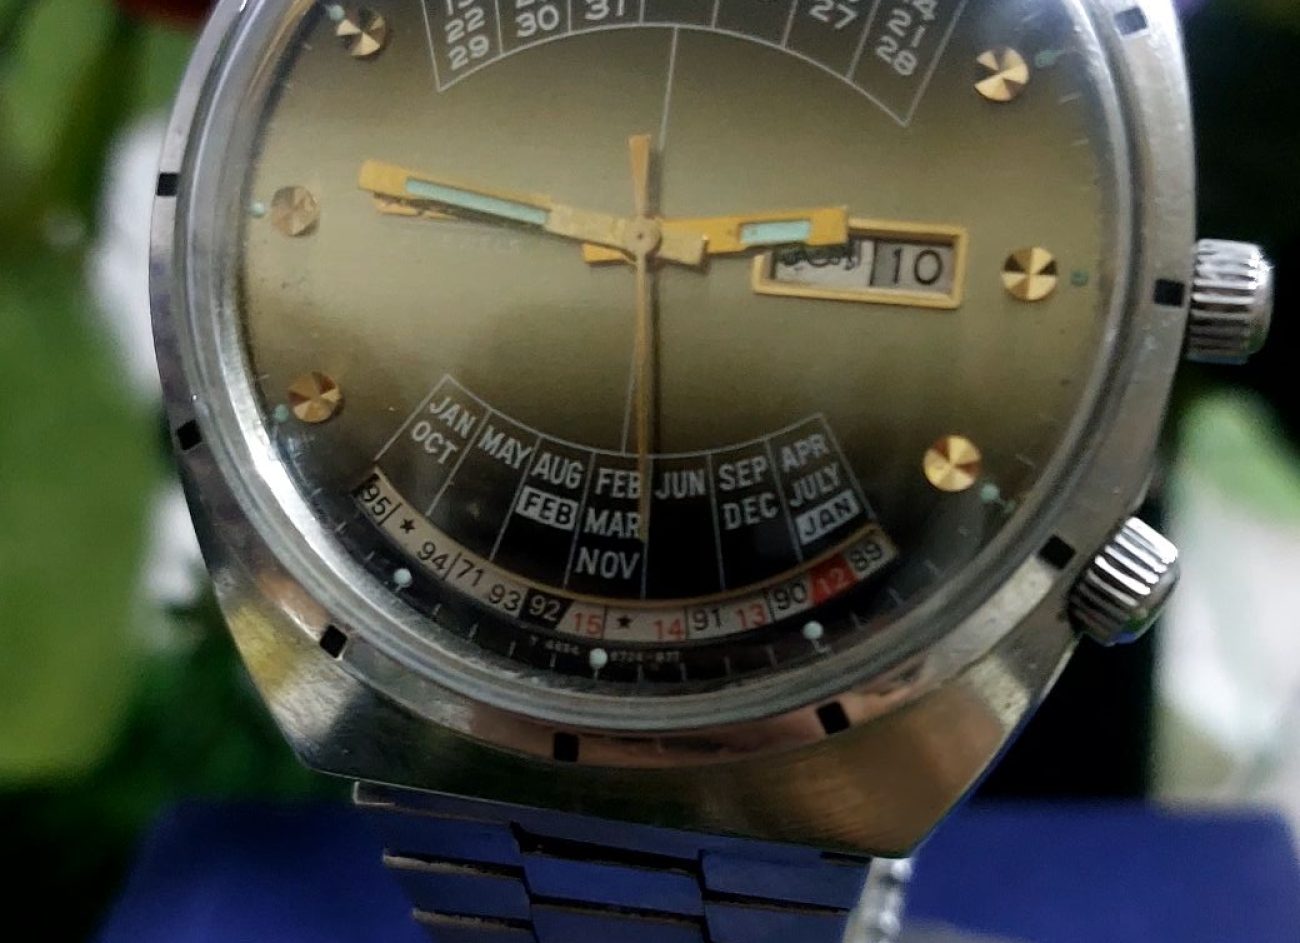 Orient College Perpetual Multi Year Calendar 21 Jewels Automatic Watch